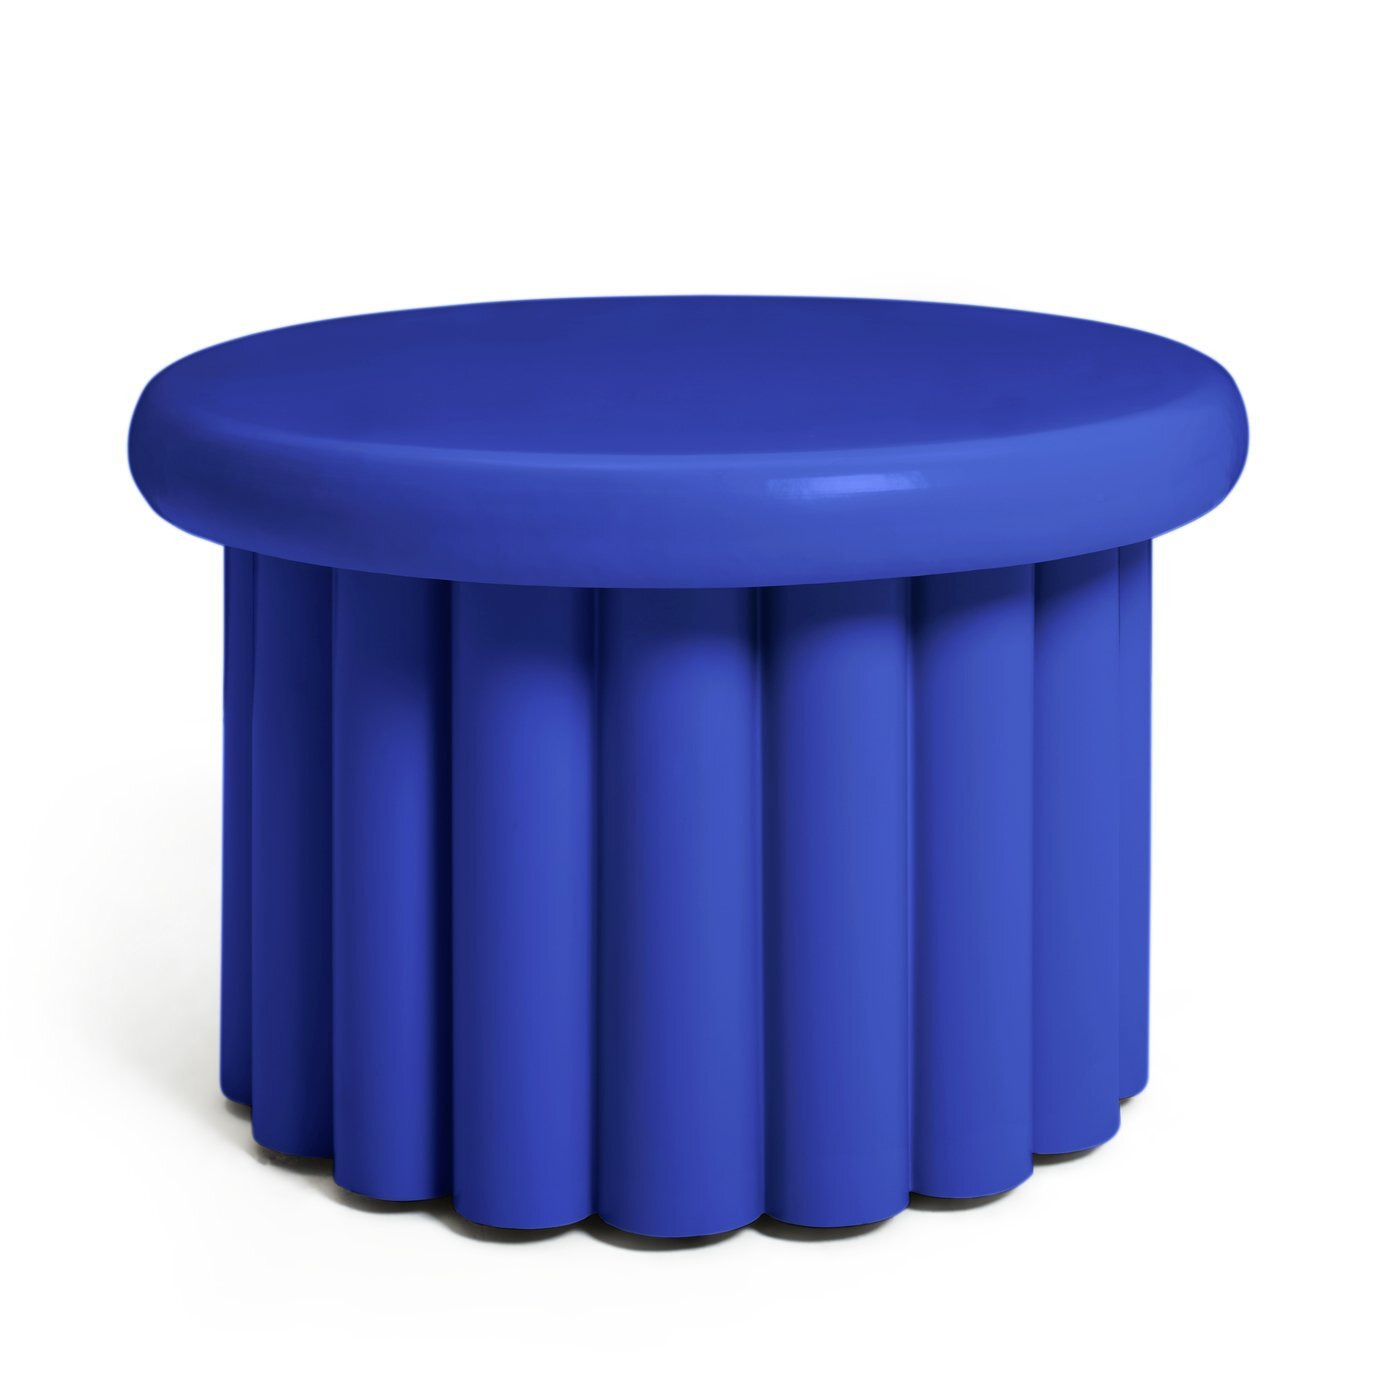 Habitat Studio Round Coffee Table - Blue - image 1